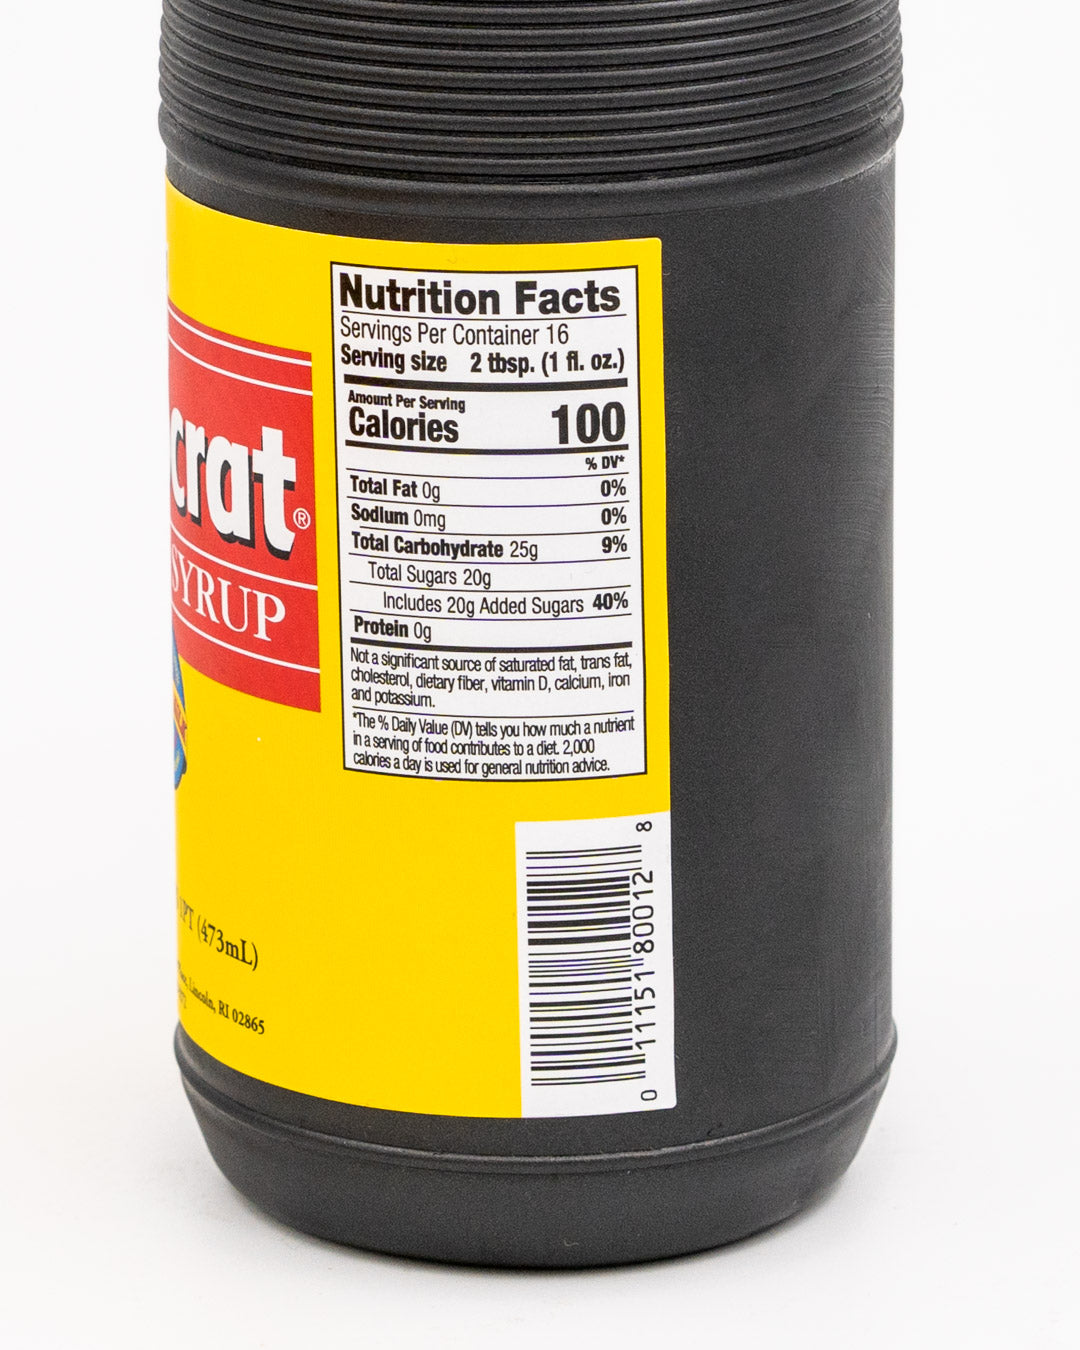 Autocrat Coffee Syrup - 16oz Bottle(s) – Little Rhody Foods, Inc.